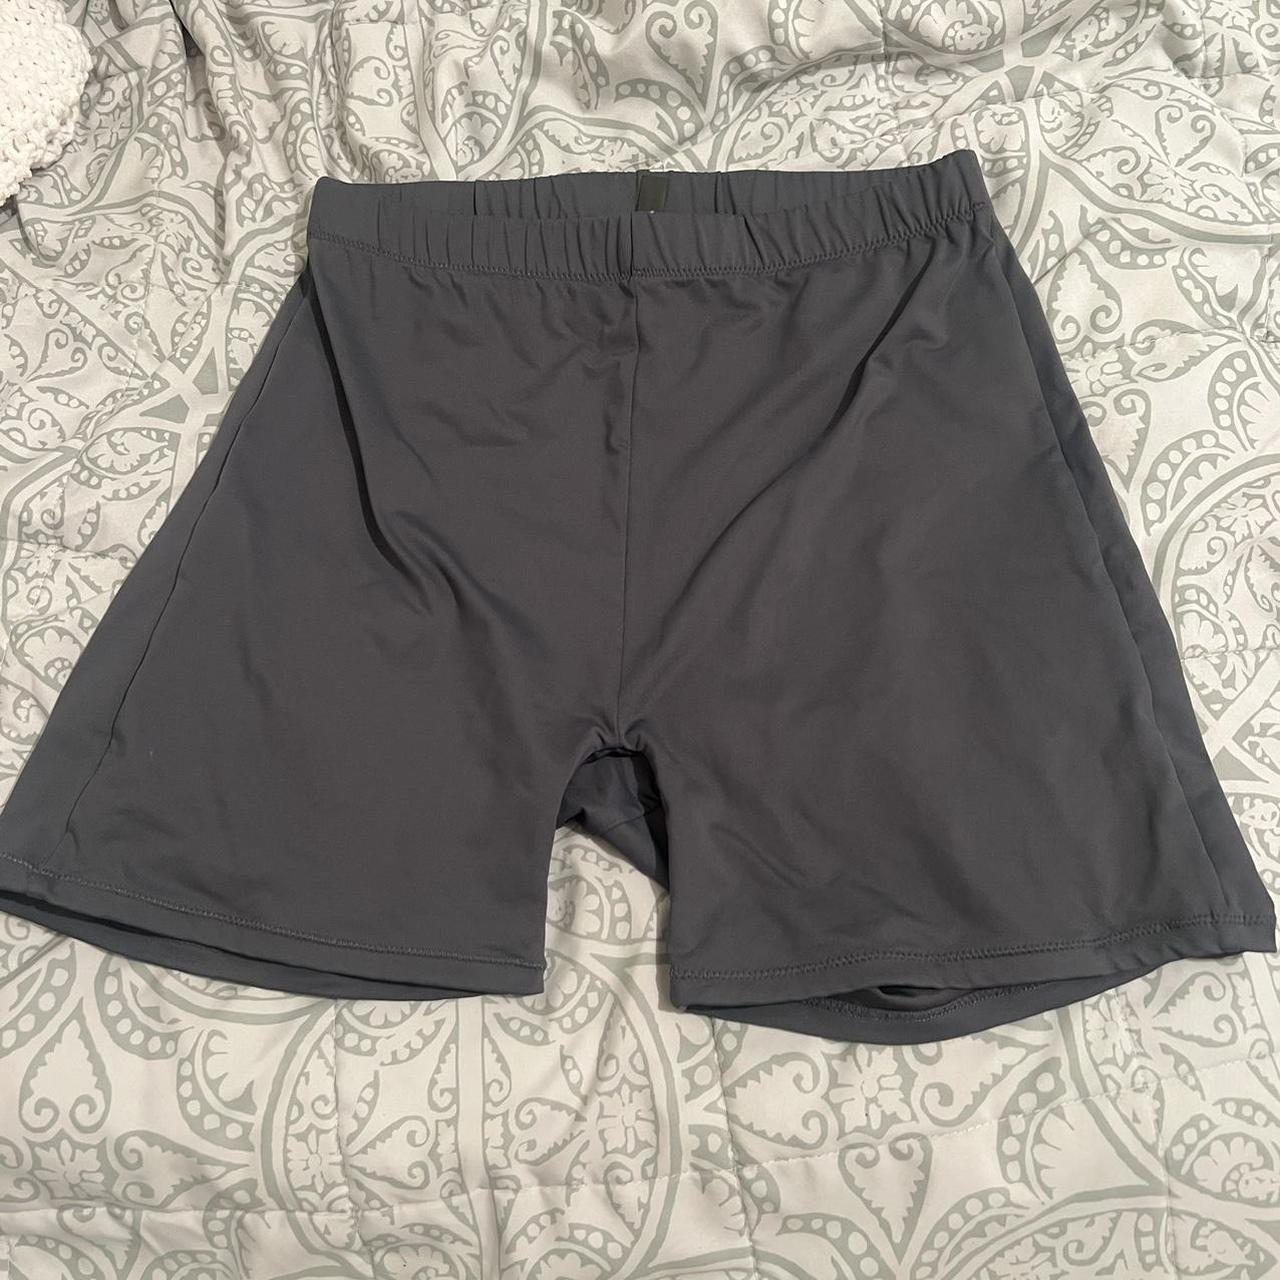 Skims swim shorts Sold out on website Medium - Depop